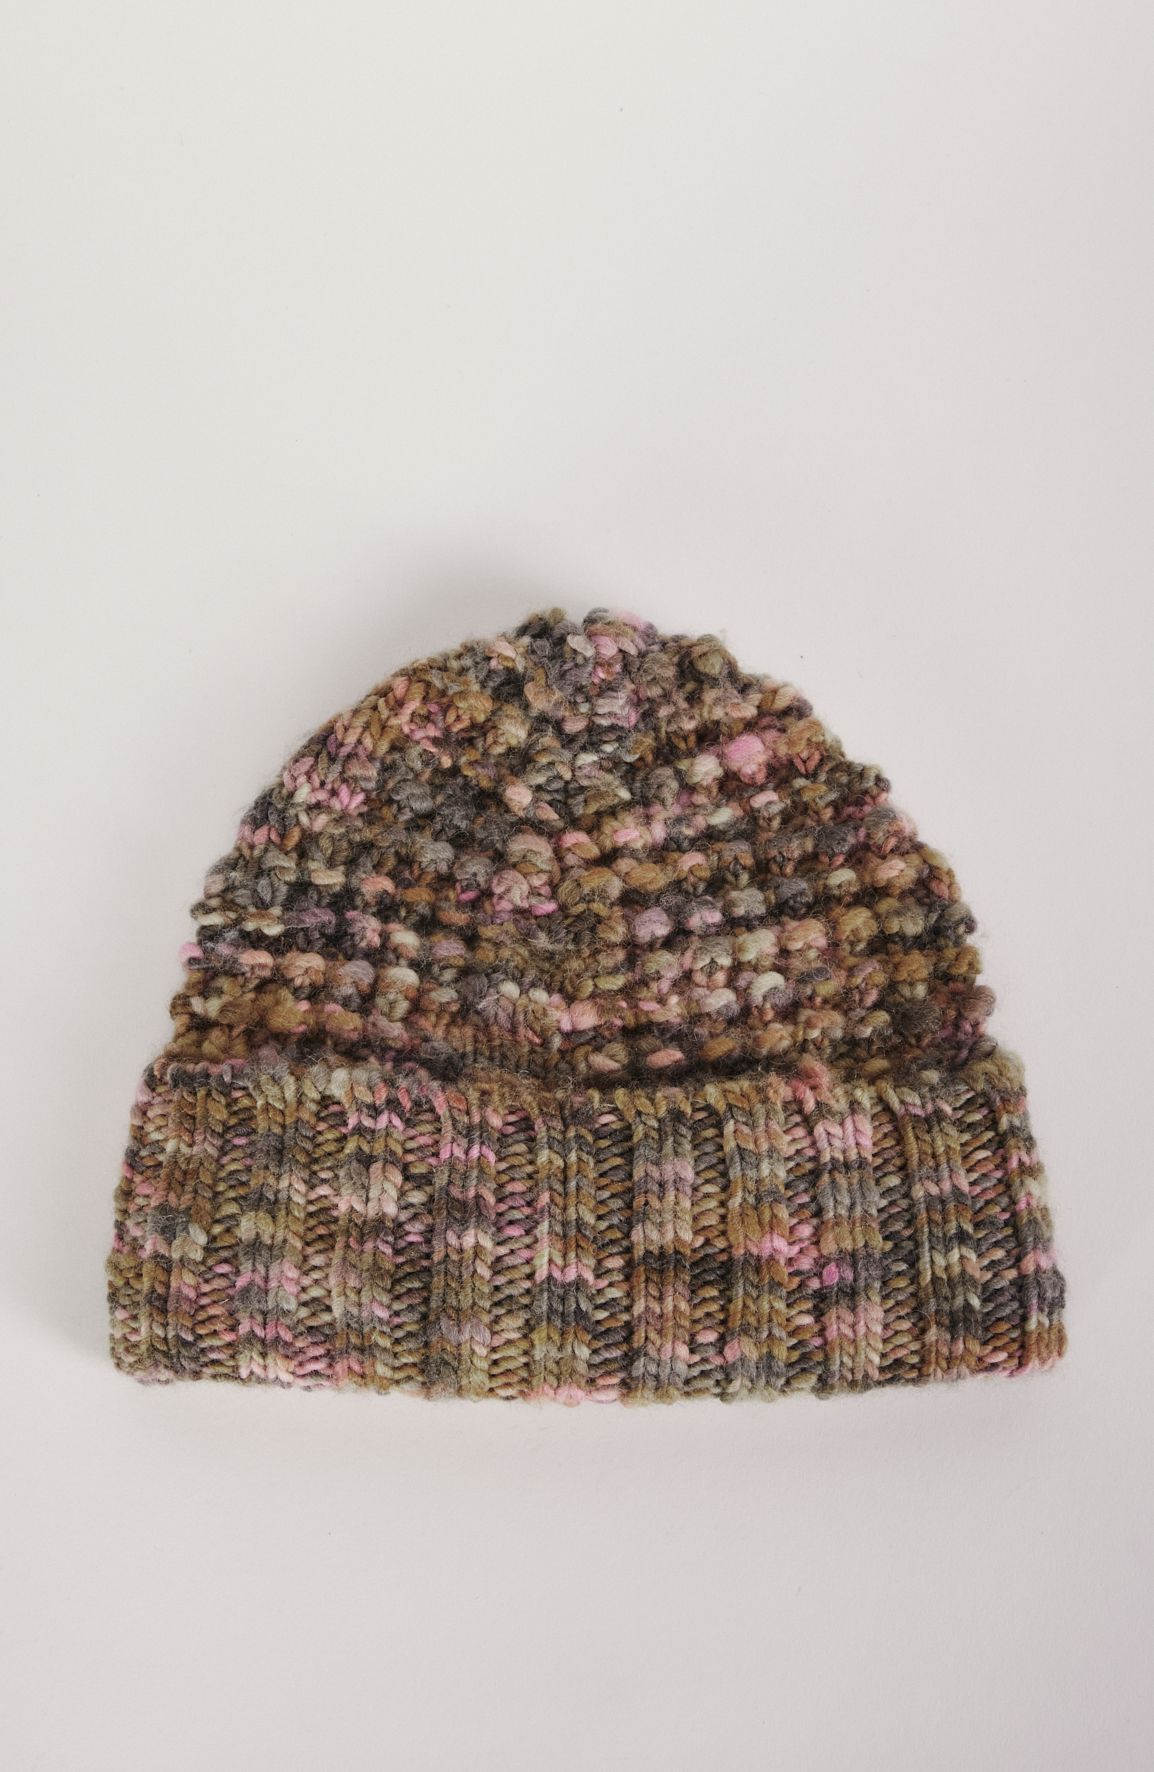 Acne Studios - Coarse knit hat in pink / nature - Schwittenberg